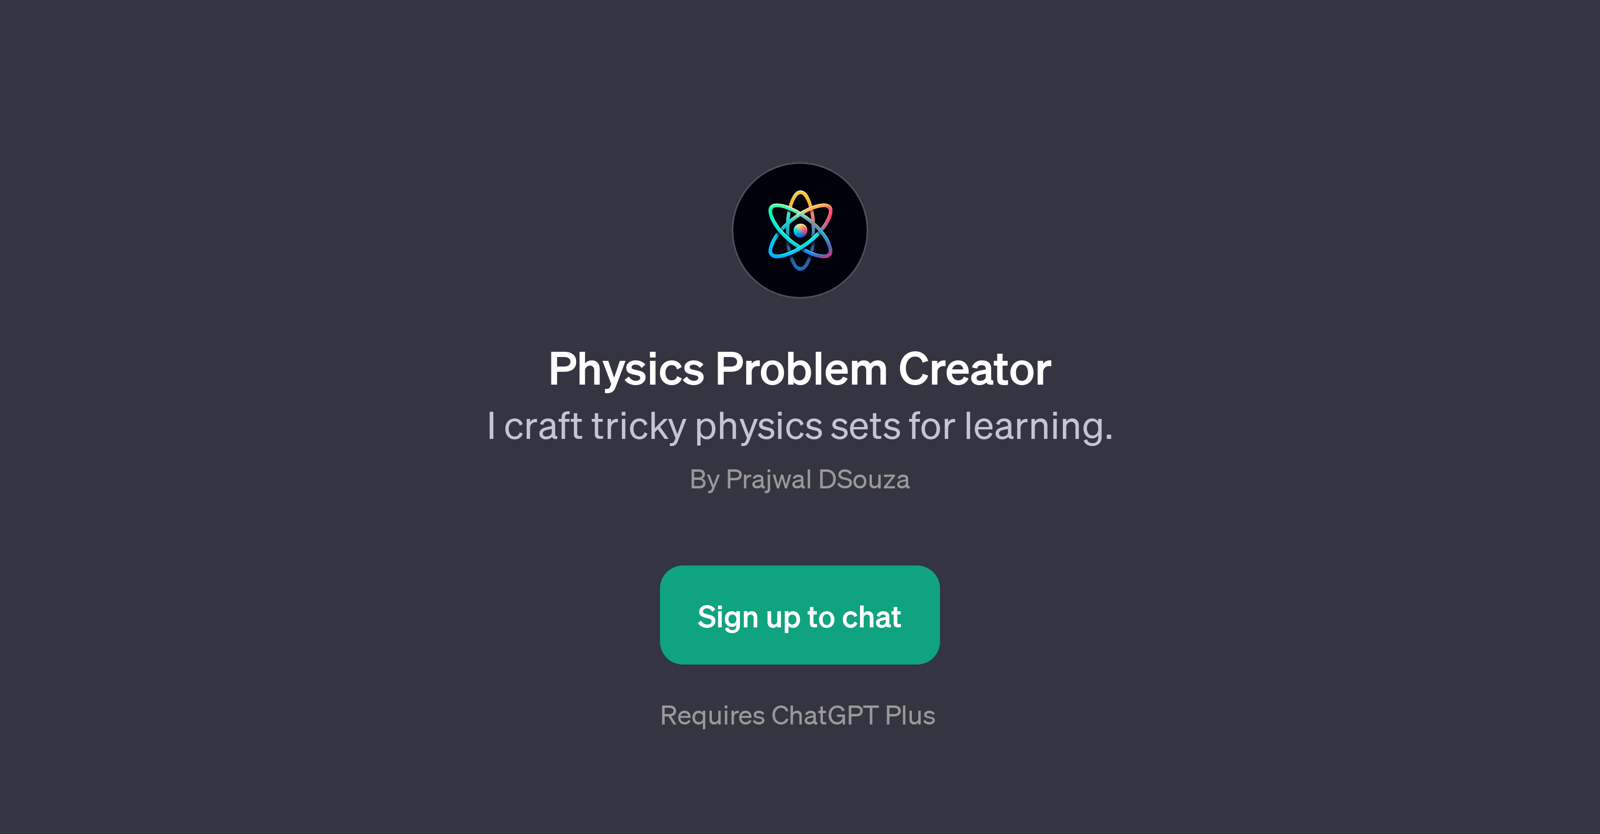 Physics Problem Creator website